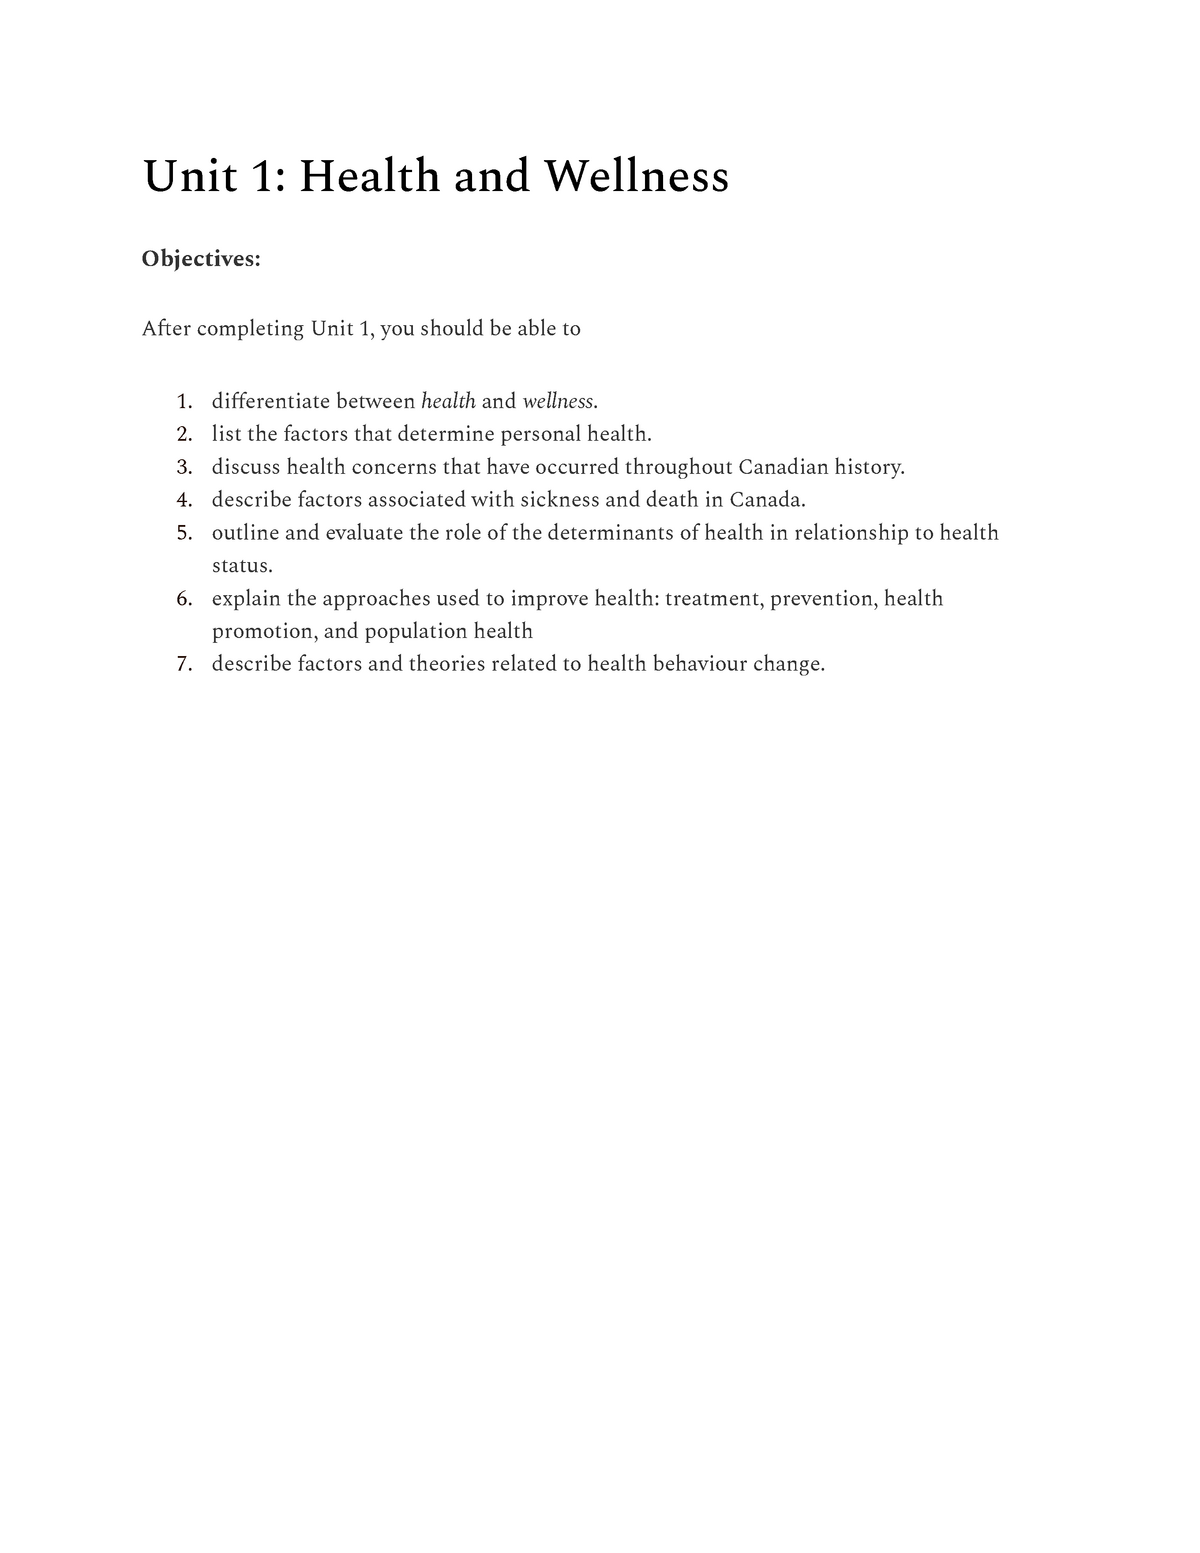 health and wellness oum assignment